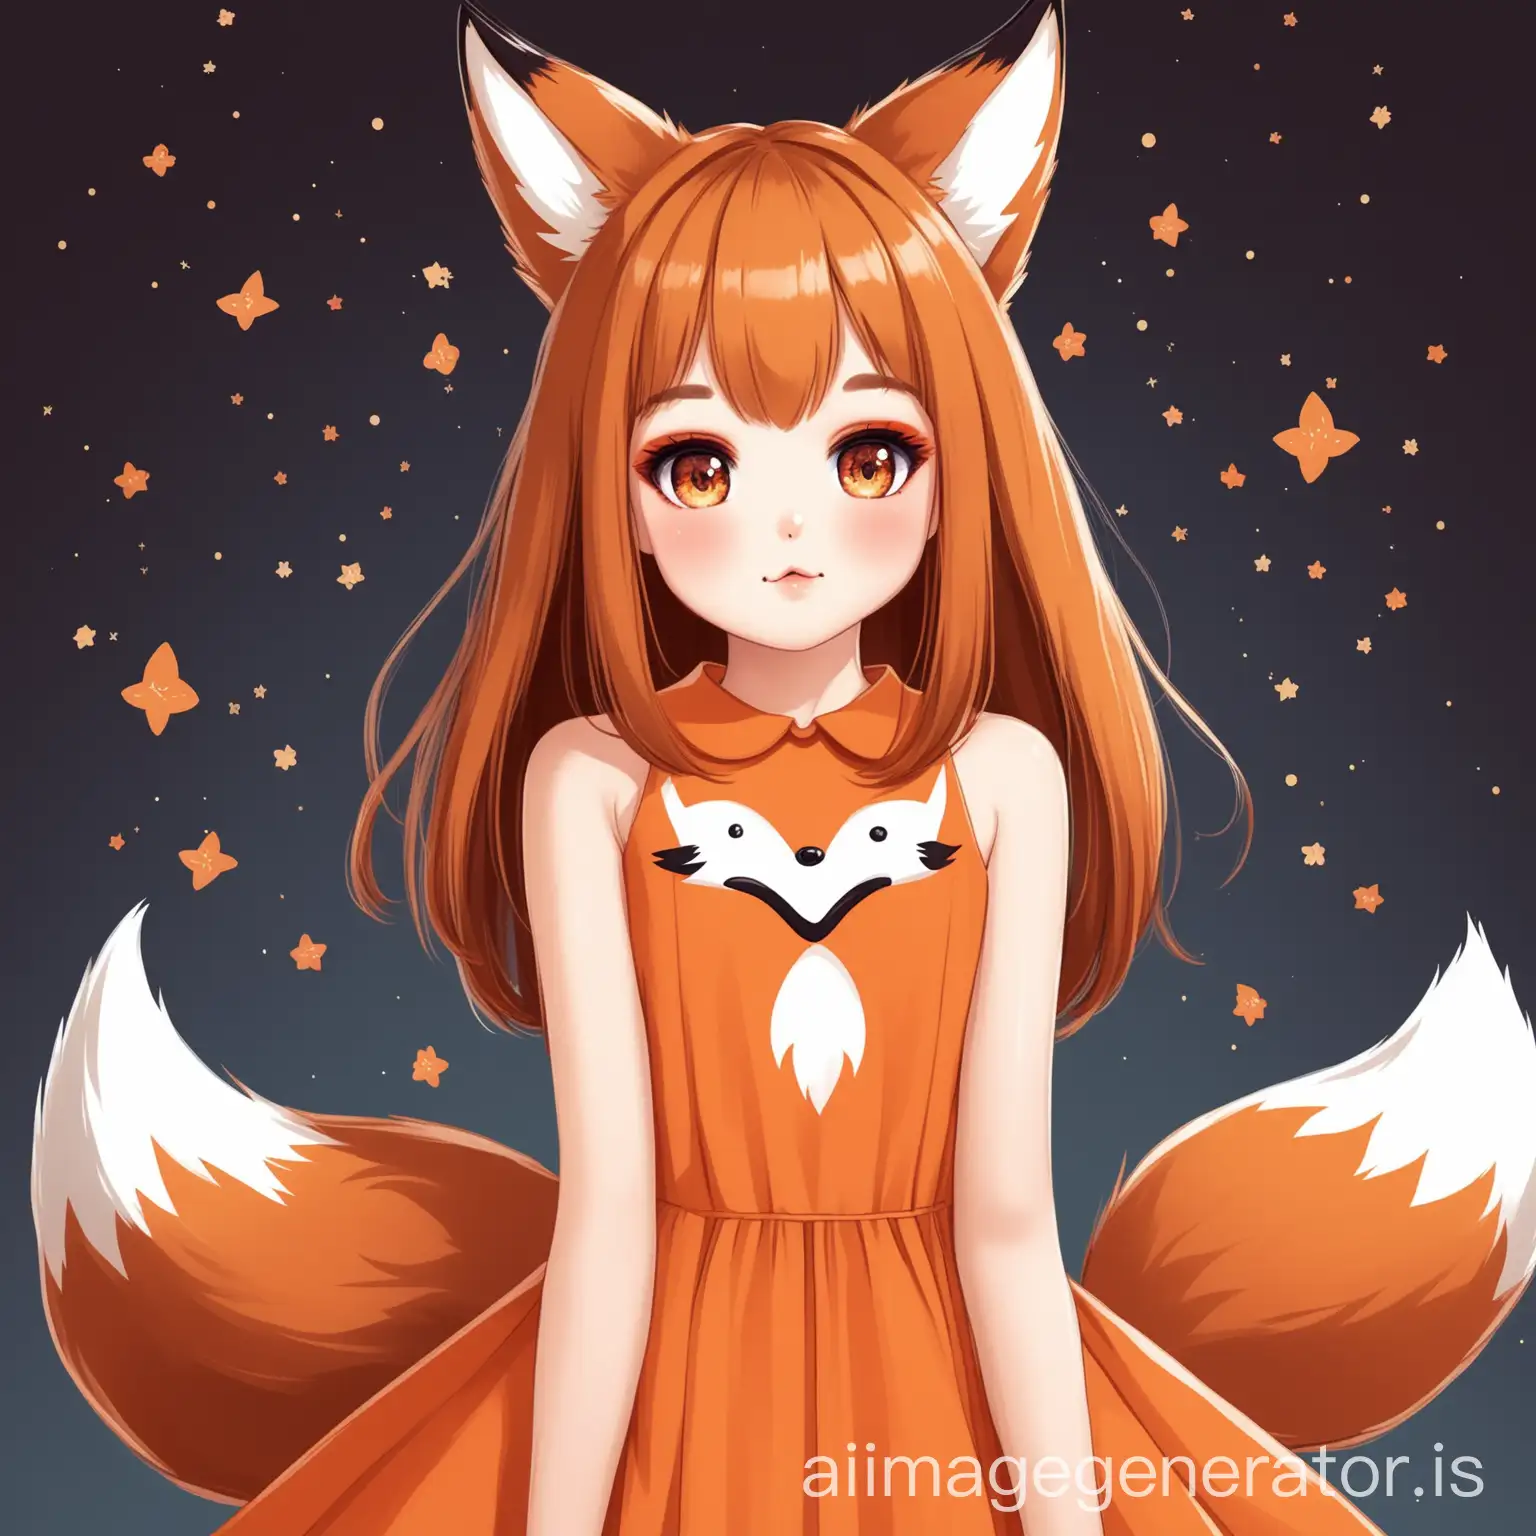 Adorable-Girl-in-Fox-Dress-and-Eyeshadow